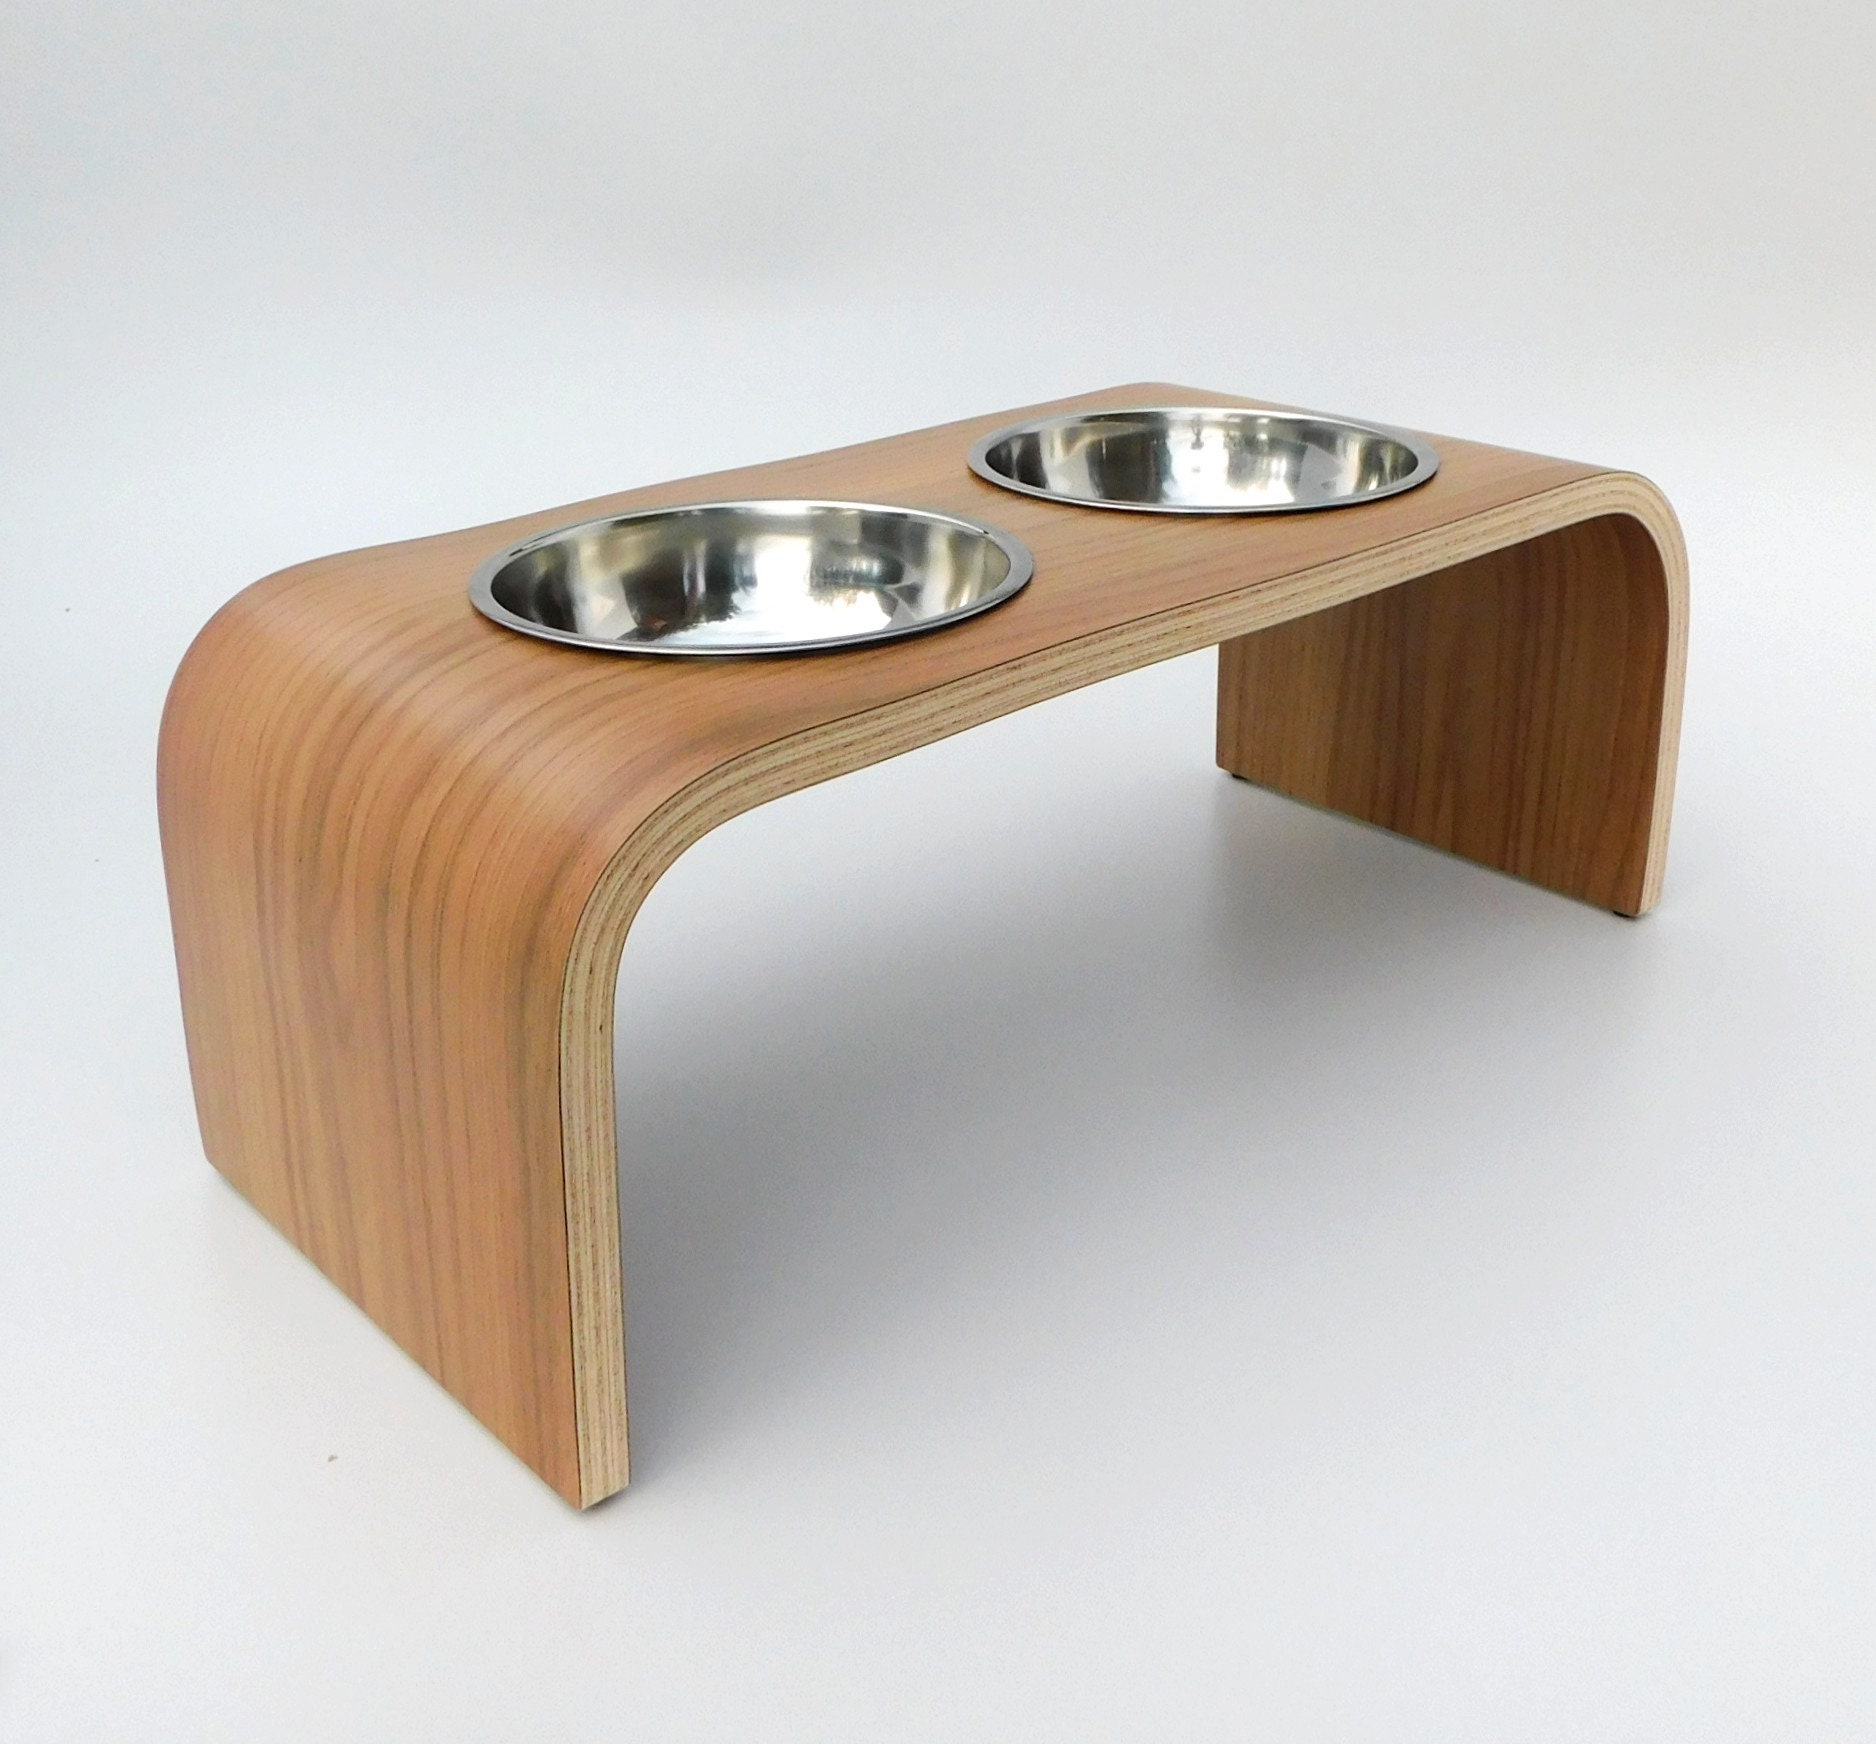 Pet Bowl Stand By Mr Dog - Walnut